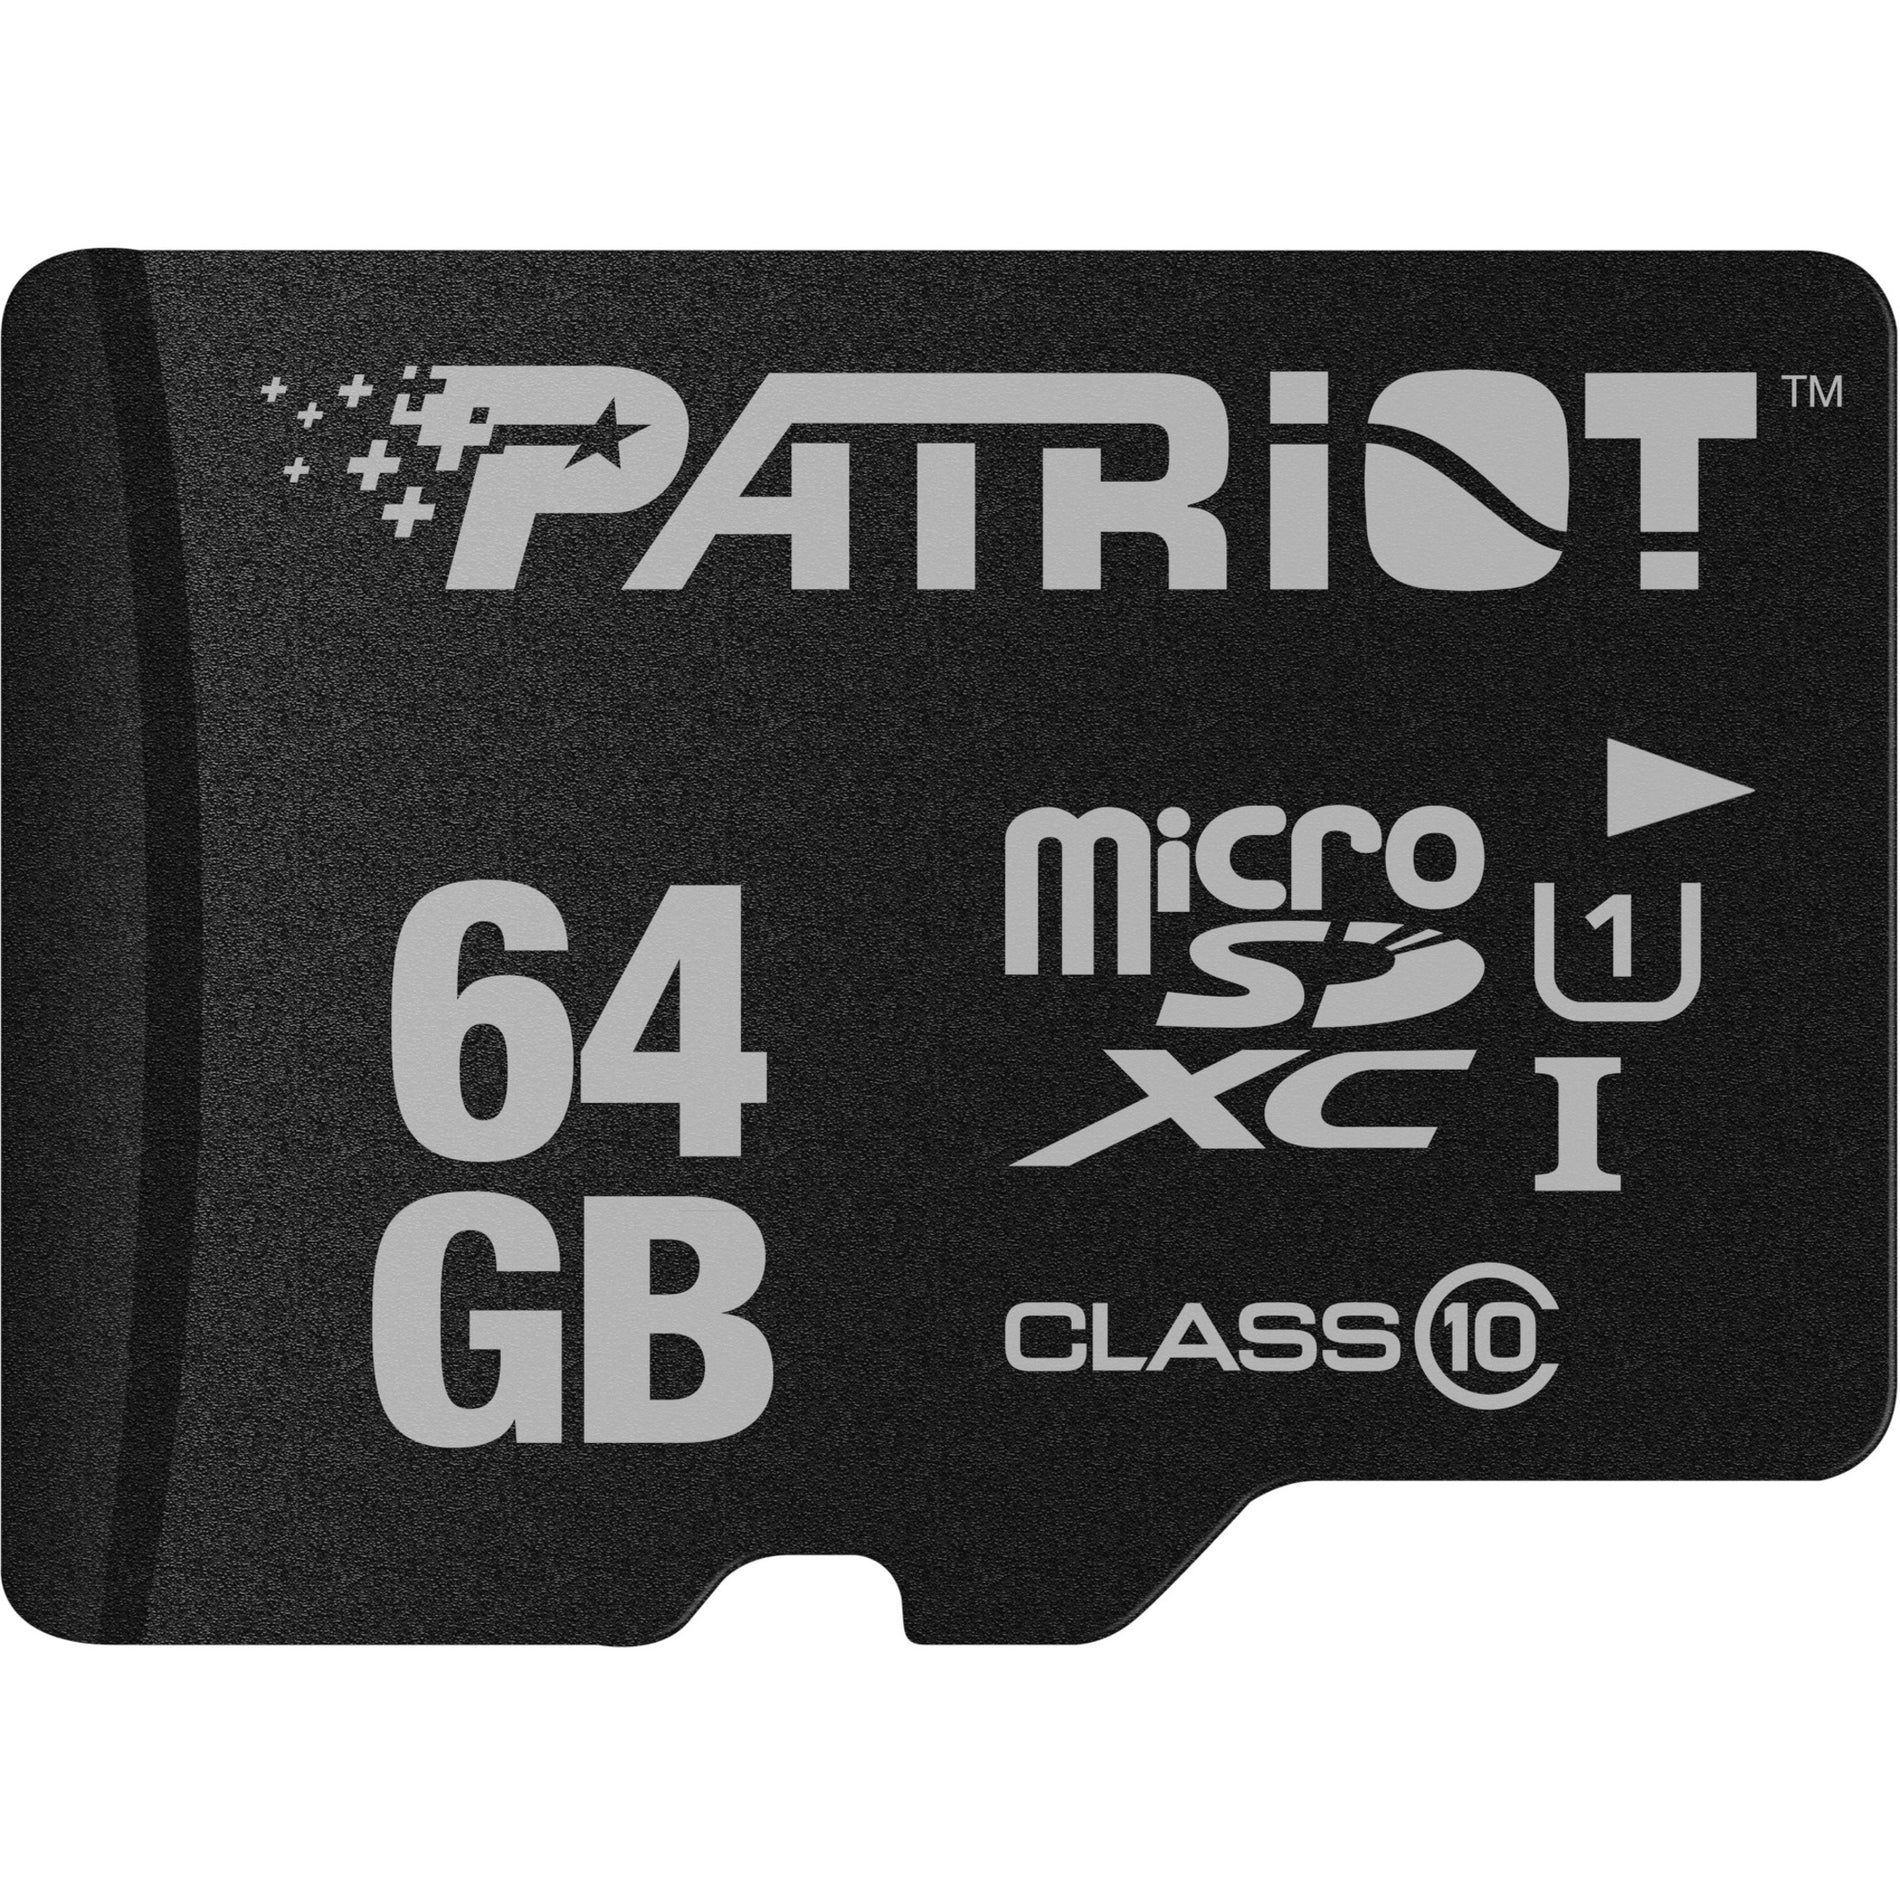 Patriot Memory PSF64GMDC10 LX 64GB microSDXC Card, 2 Year Limited Warranty, Class 10/UHS-I (U1), 80 MB/s Read Speed